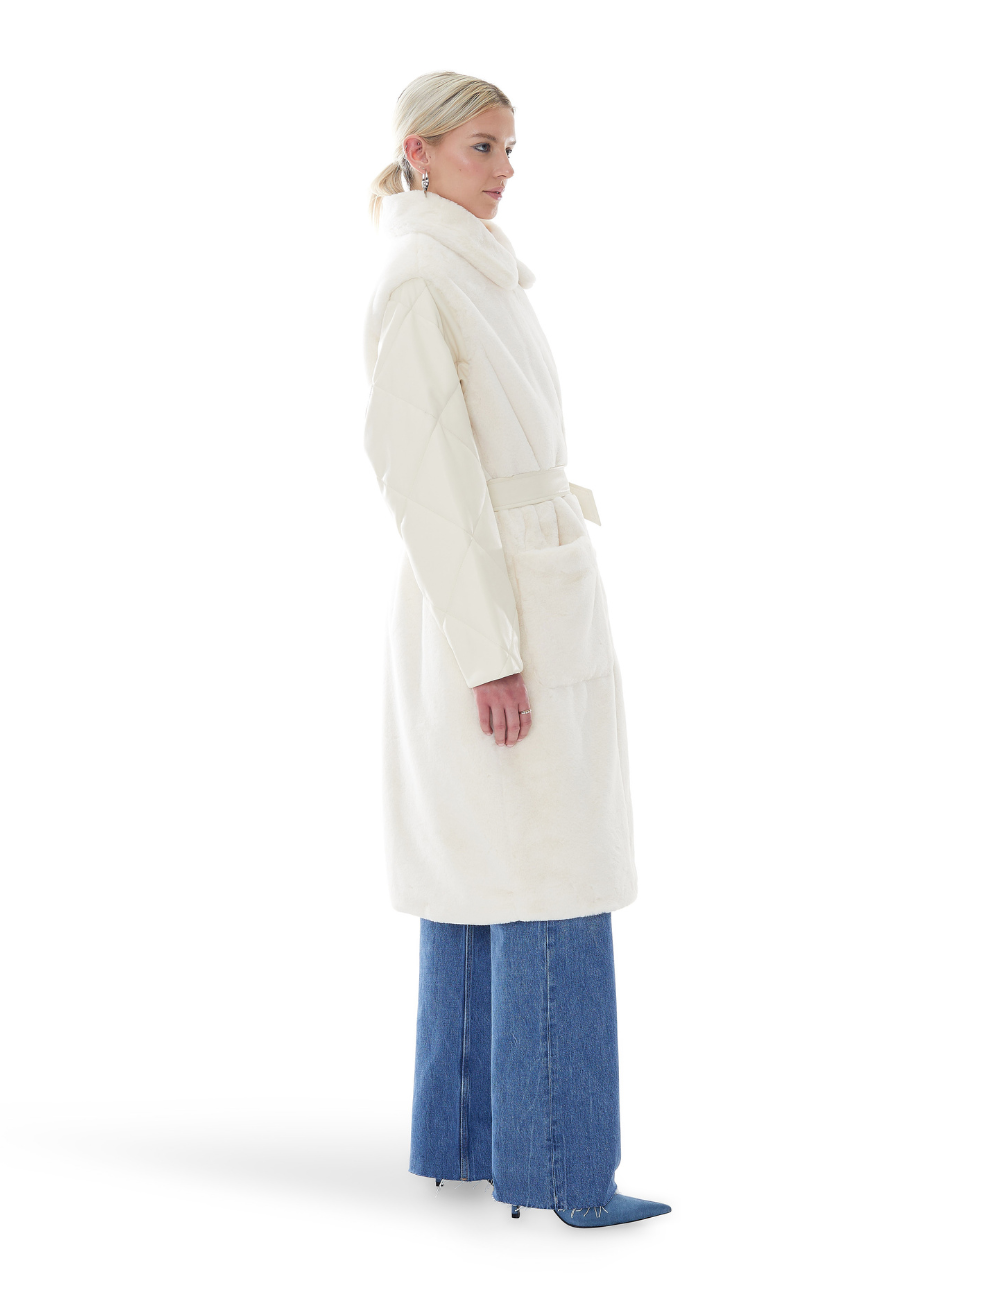 Sadie White Jacket Inclusive Fashion Repurposed Sustainable Faux Fur Leather